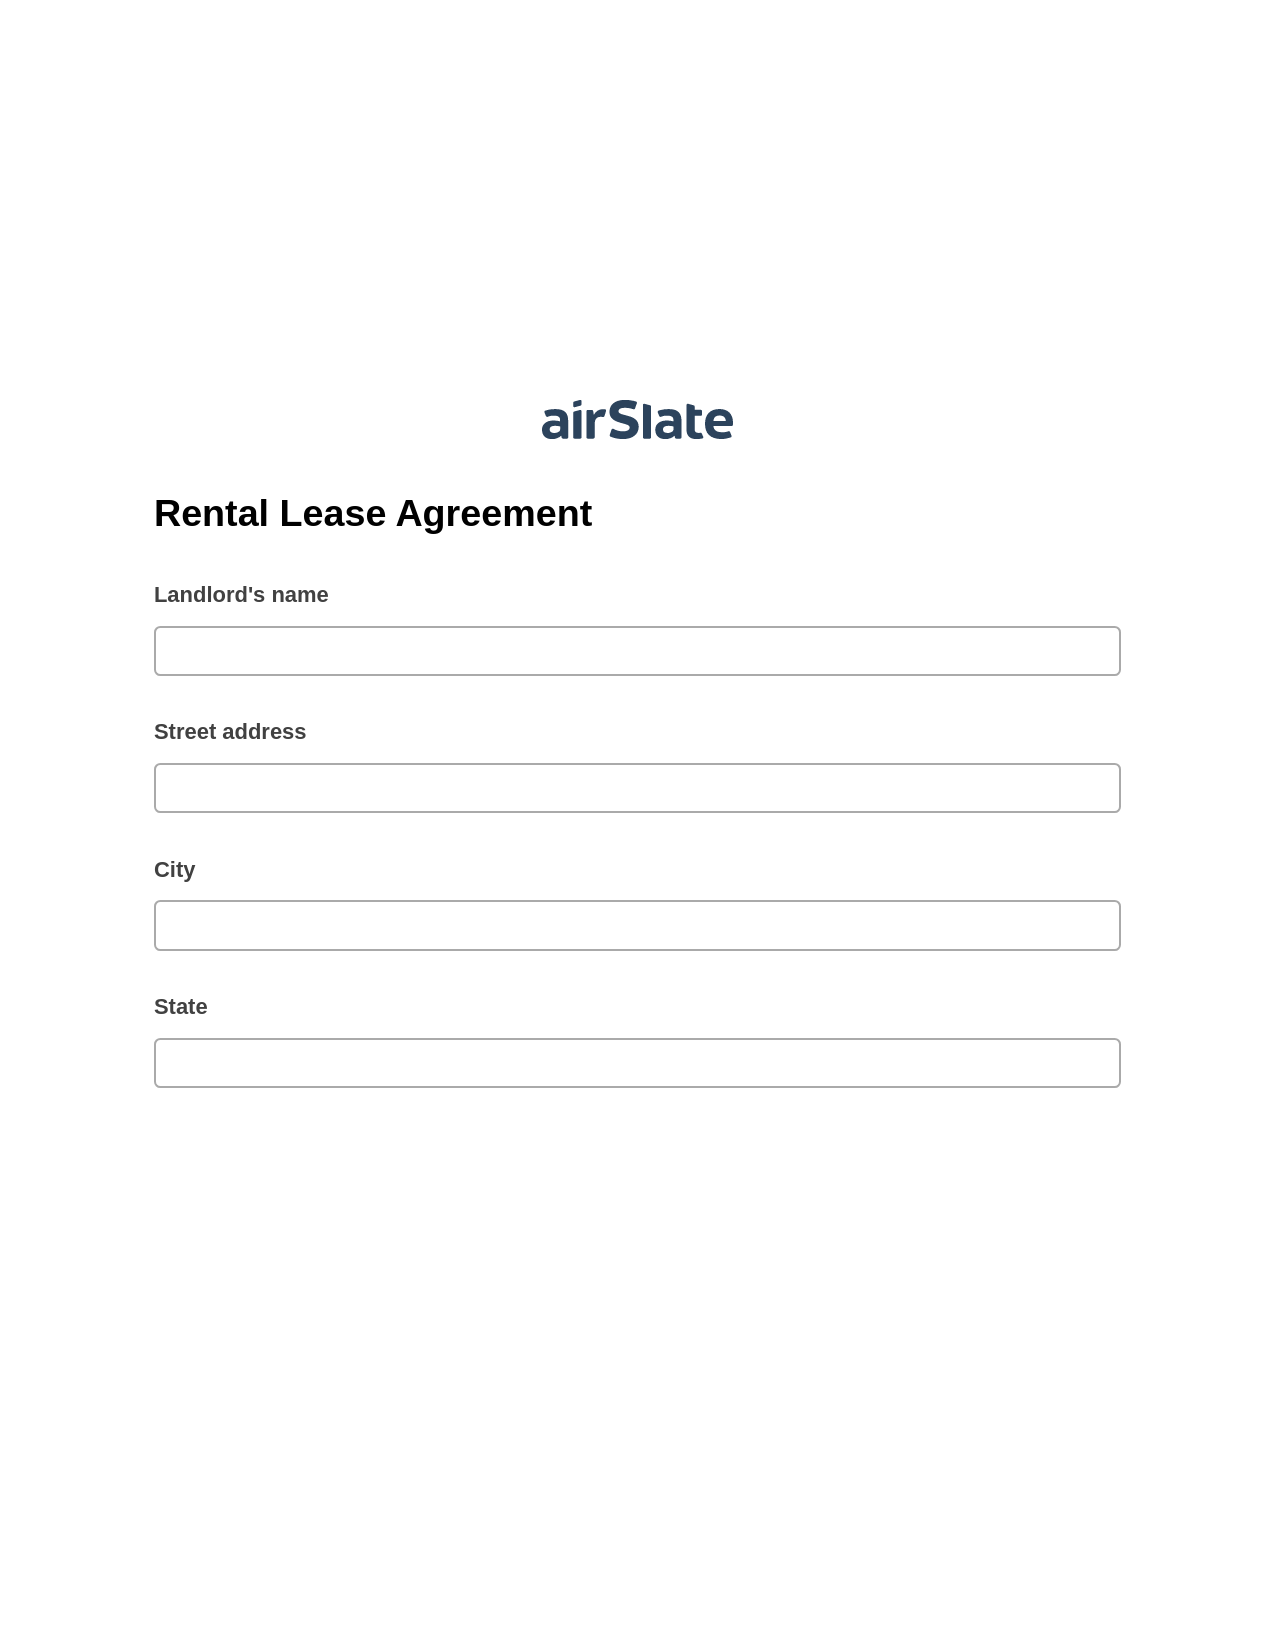 Rental Lease Agreement Pre-fill Slate from MS Dynamics 365 Records Bot, Google Cloud Print Bot, Box Bot